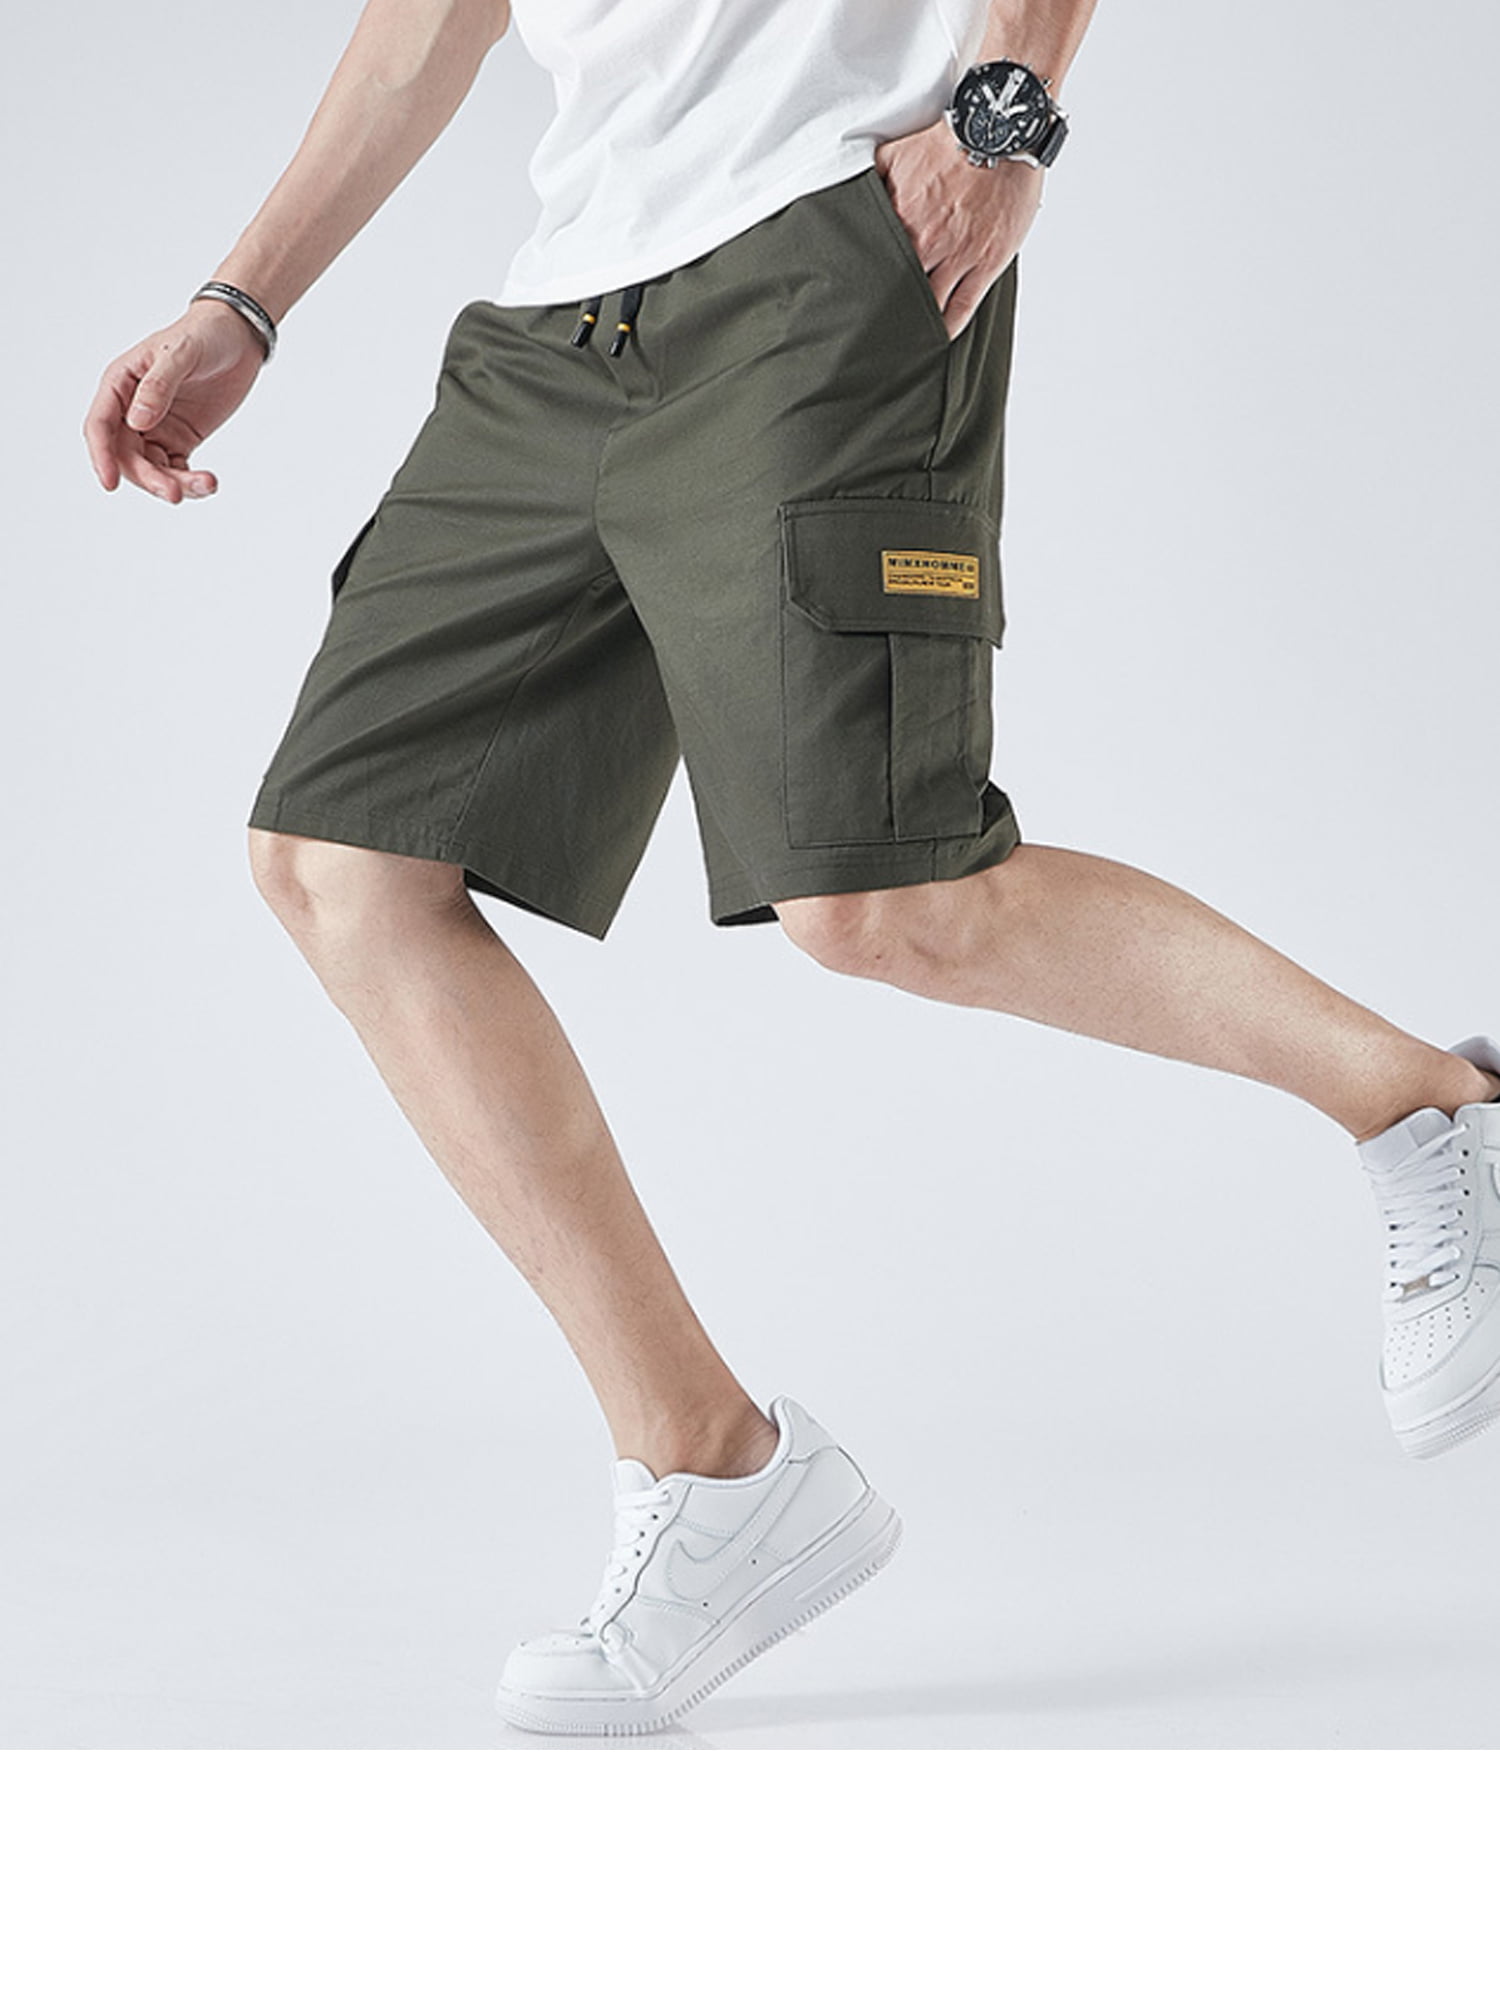 APTRO Mens Cargo Shorts Cotton Combat Casual Shorts with Multi Pockets D02 